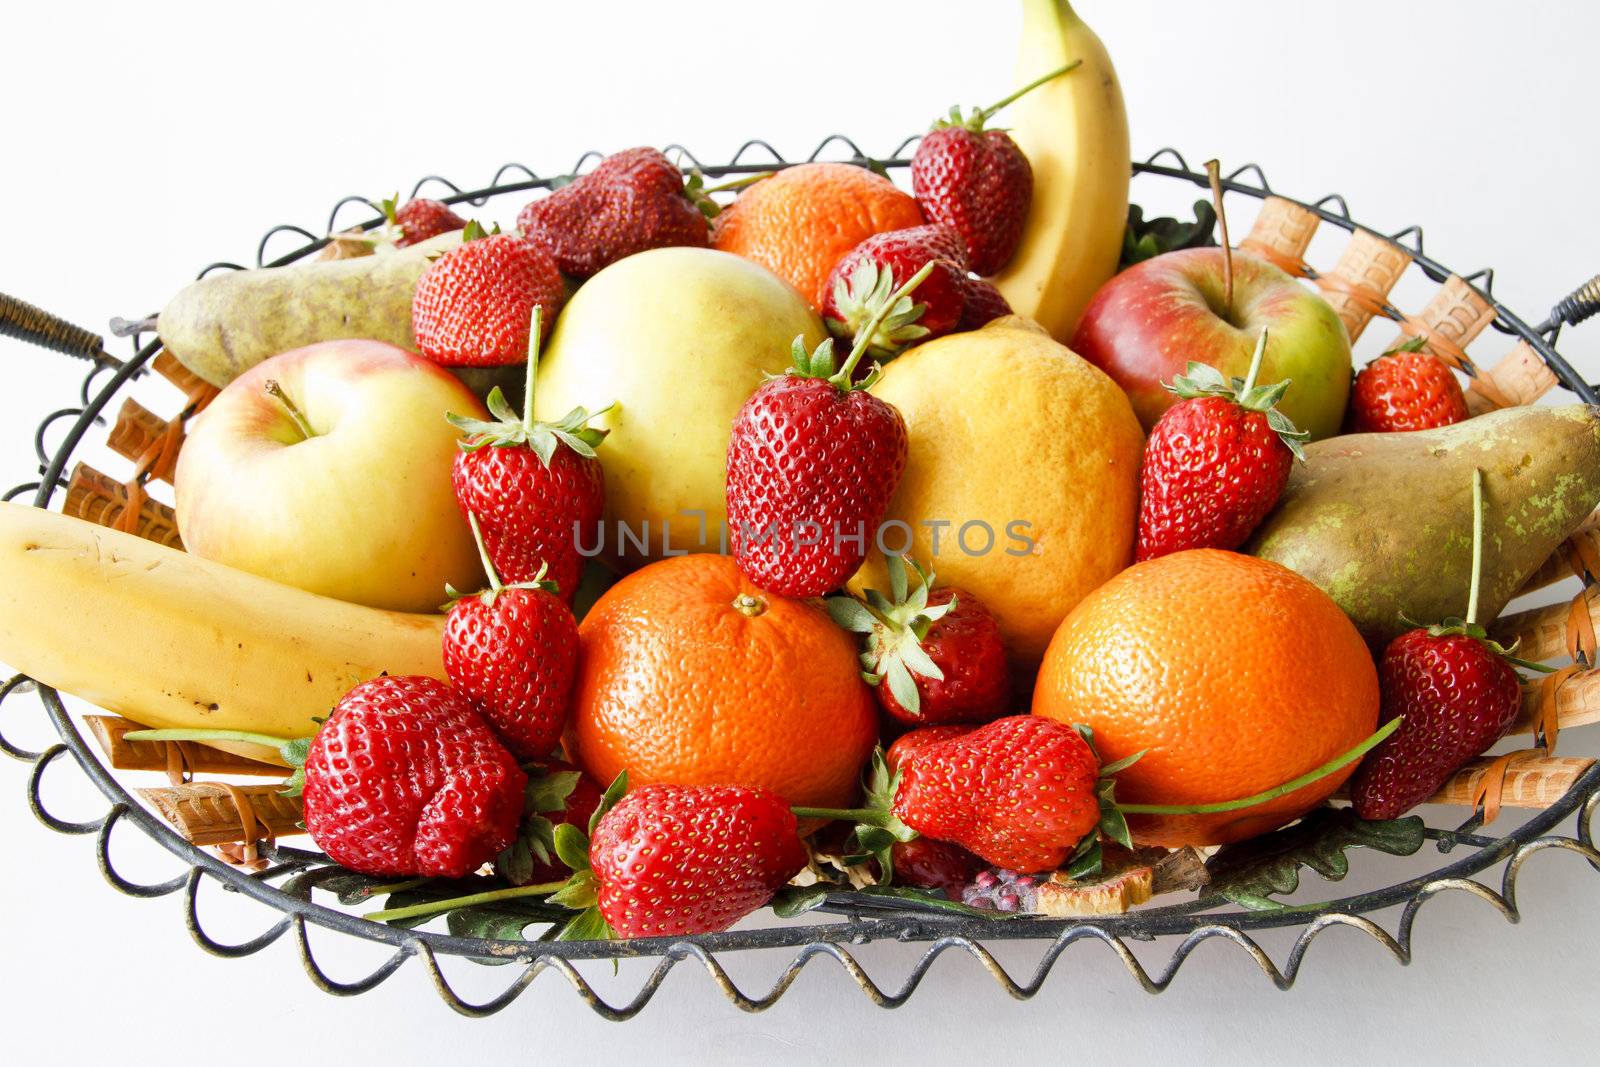 Fruits basket with strawberries, pears, apples, lemon, oranges, bananas